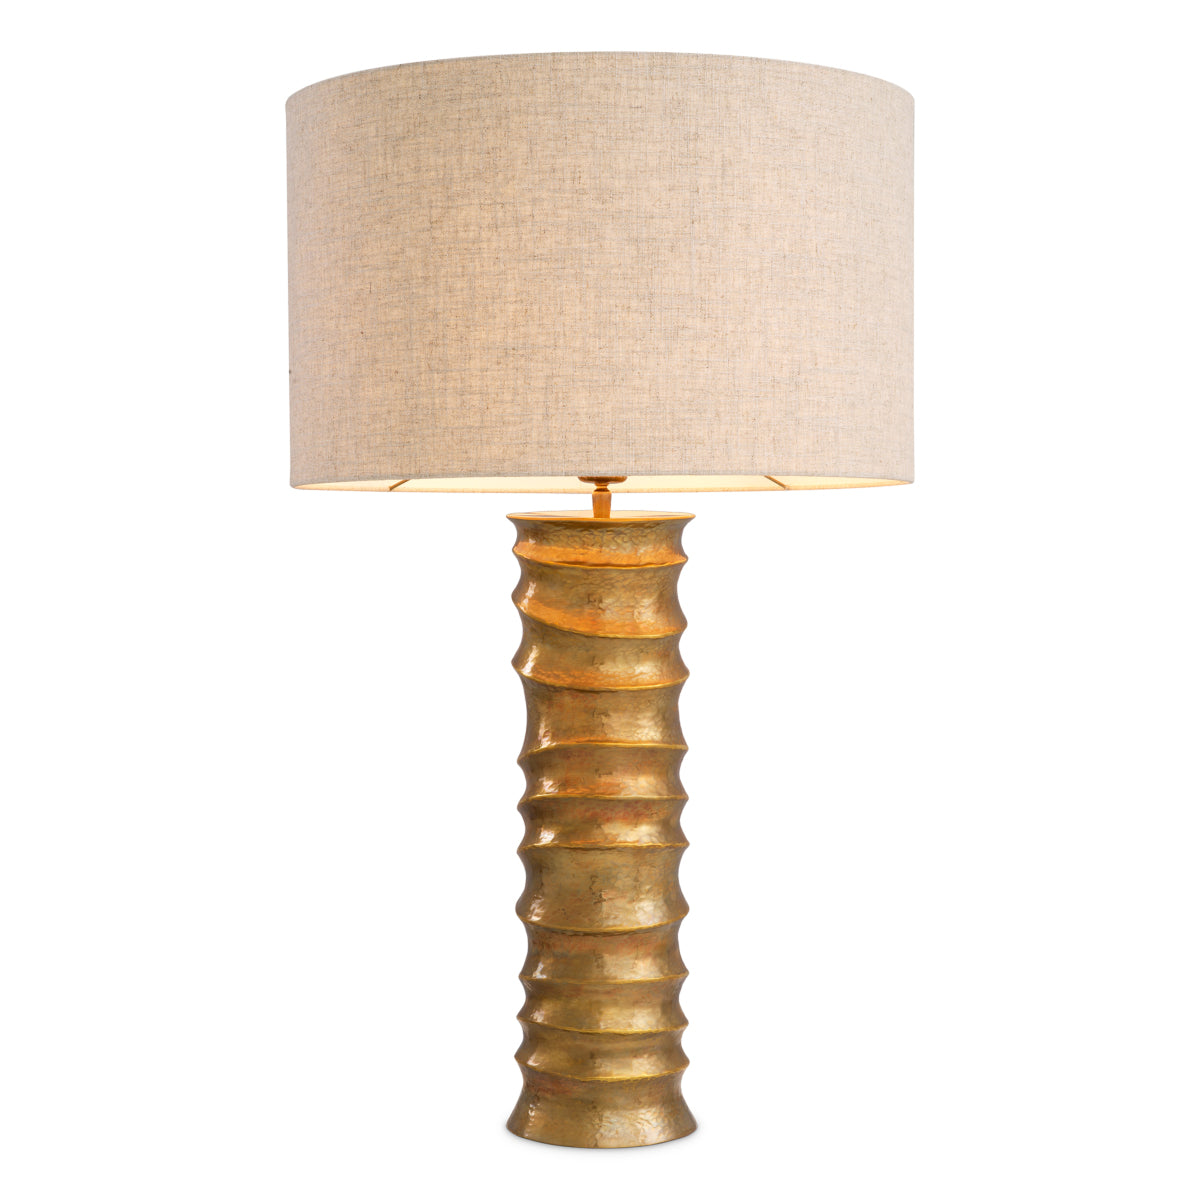 Table Lamp Gilardon vintage brass finish incl shade